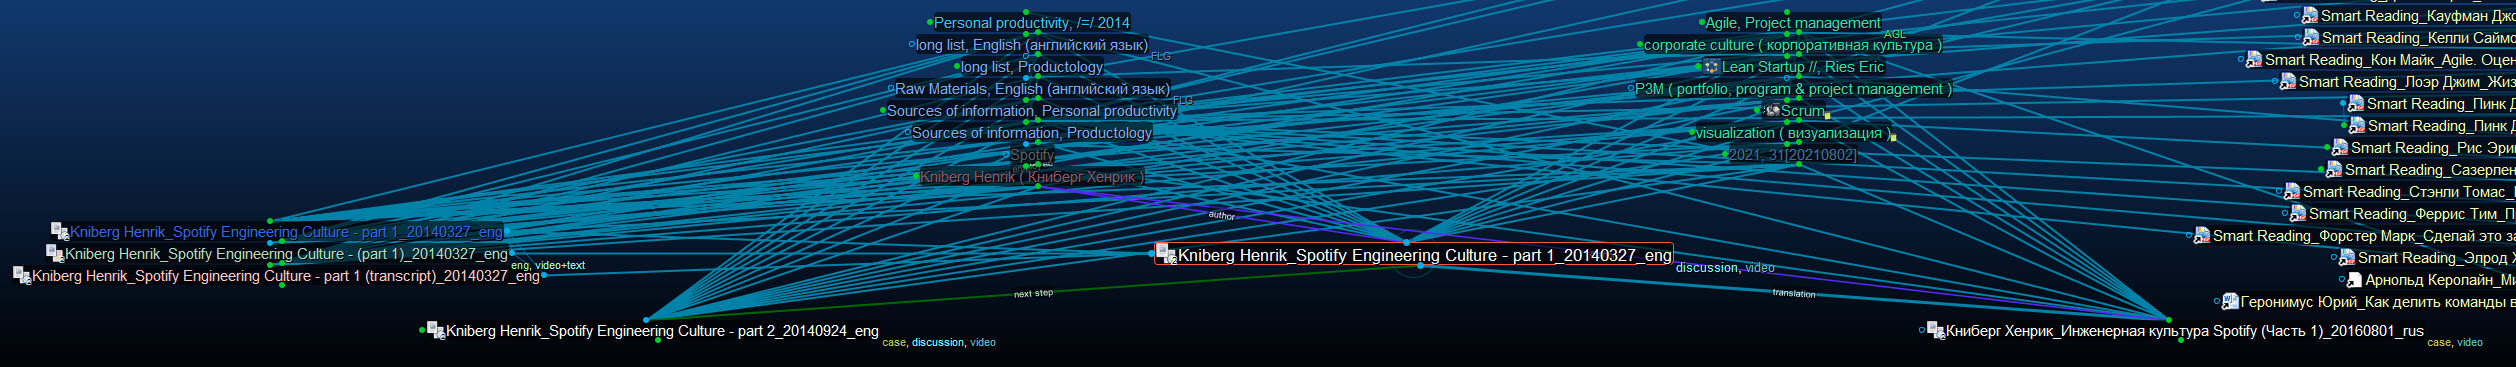 RV_Knieberg Henrik_Spotify Engineering Culture - part 1_TB8 screen_20210804.jpg